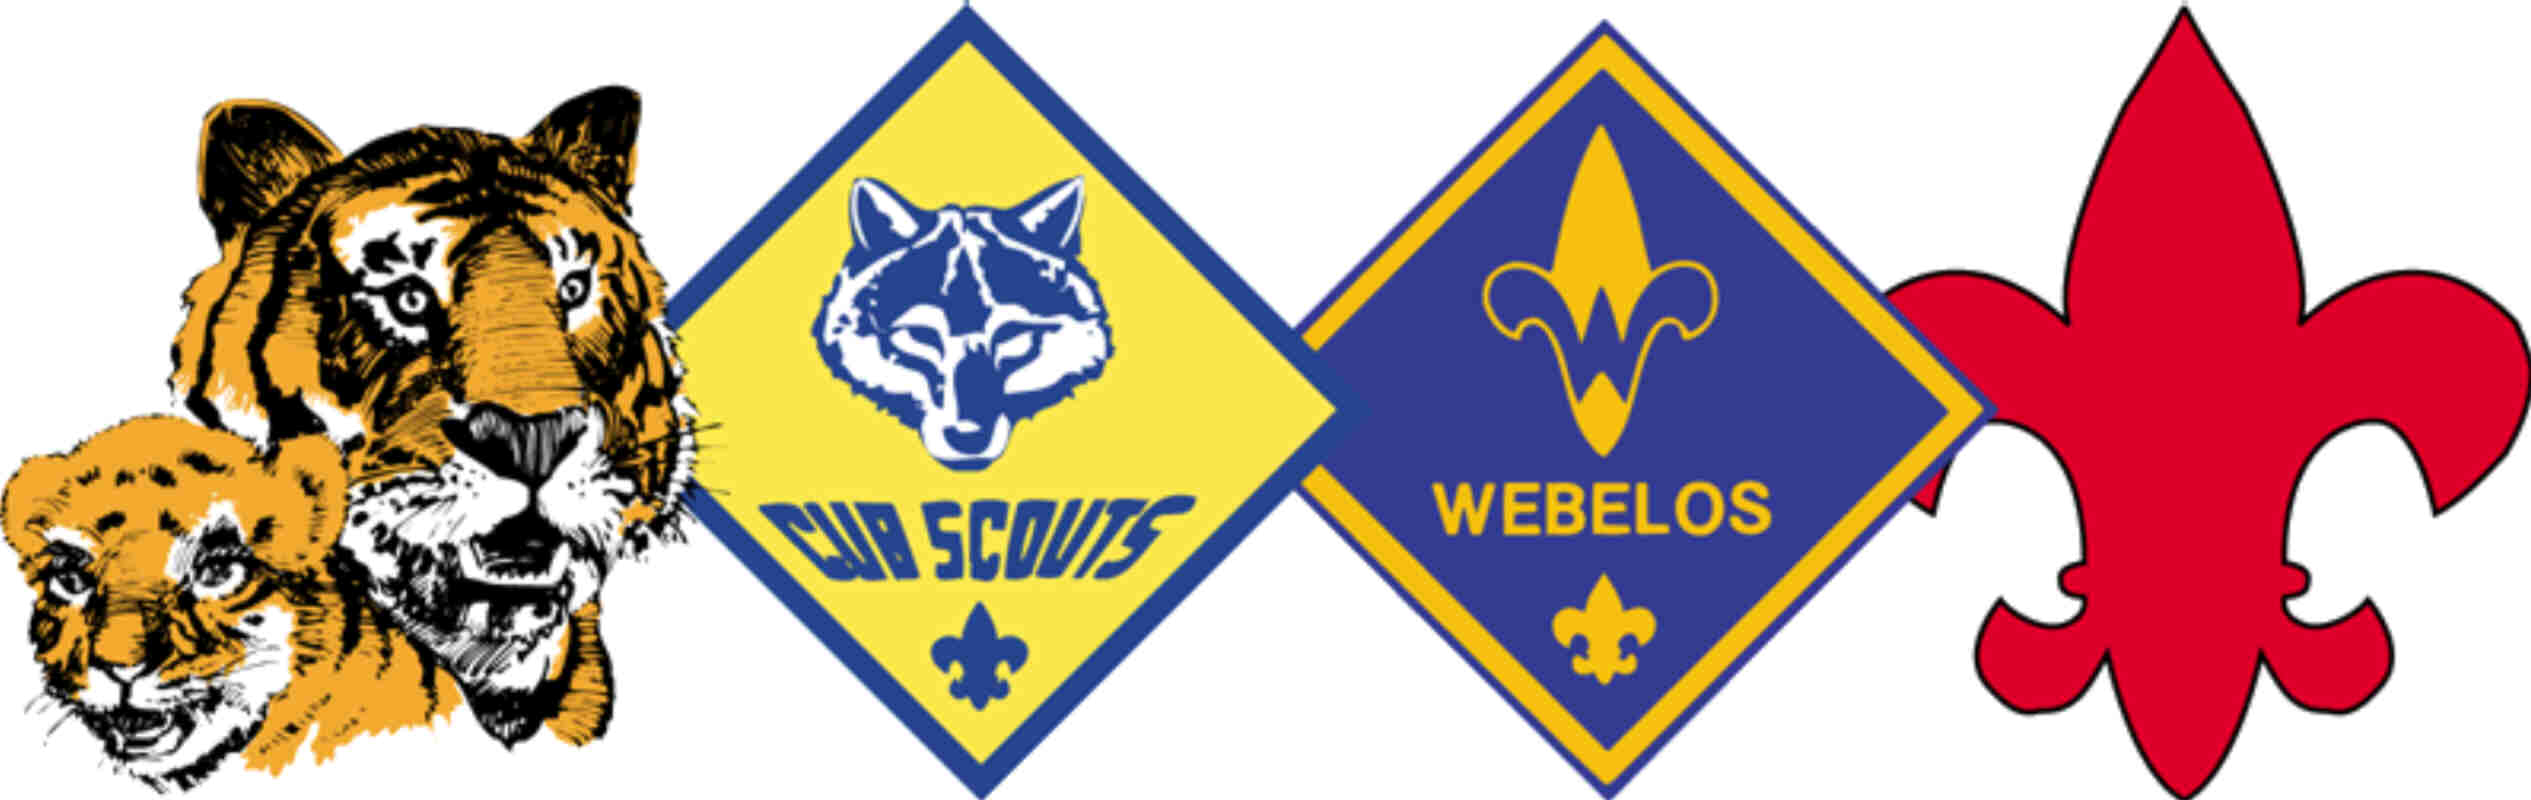 Webelos   Cub Scout Pack 311